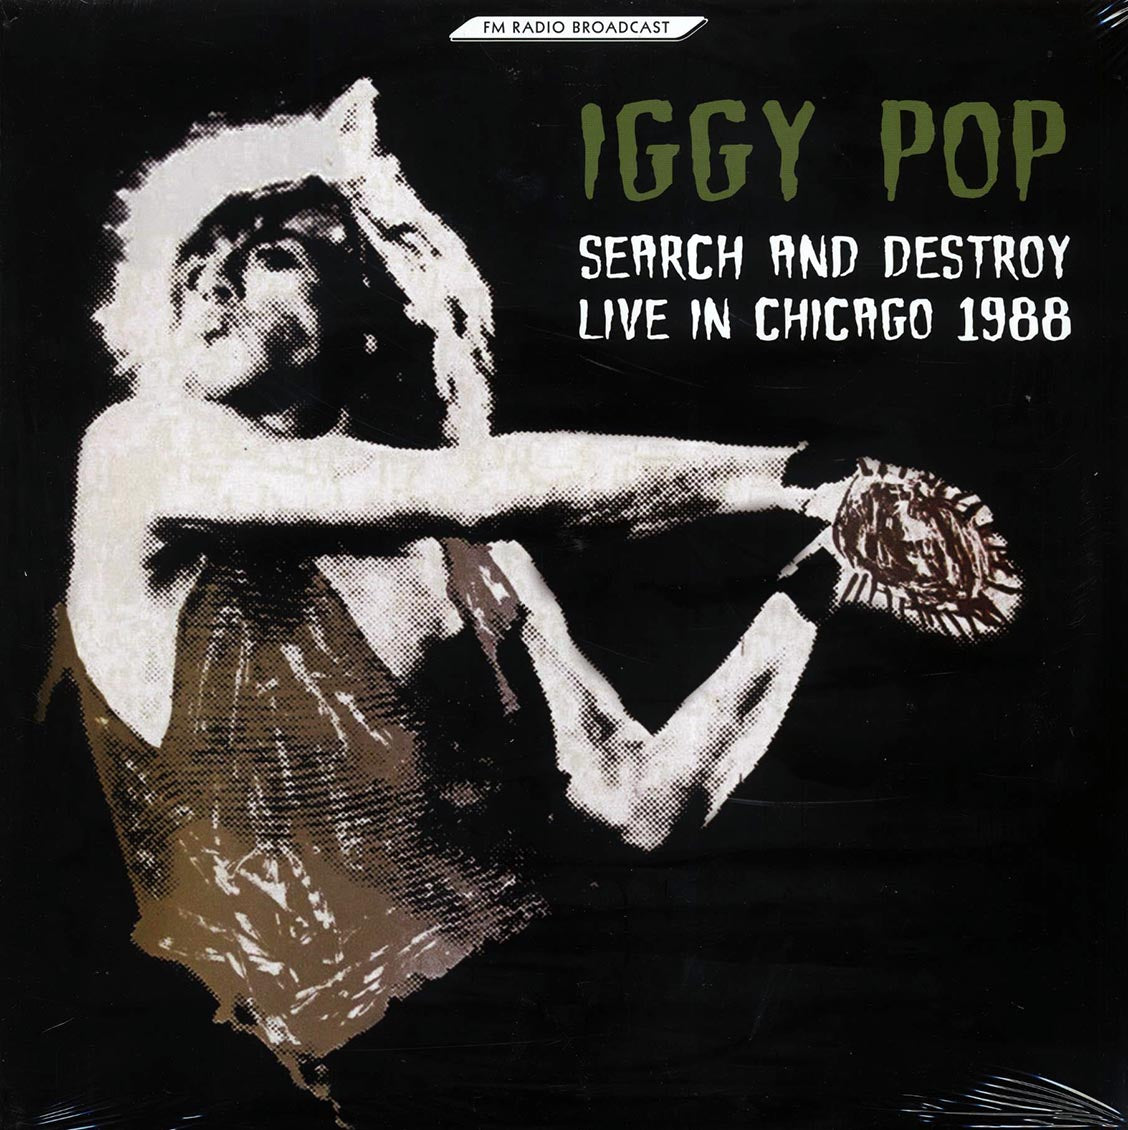 Iggy Pop - Search And Destroy: Live In Chicago 1988 (2xLP) - Vinyl LP